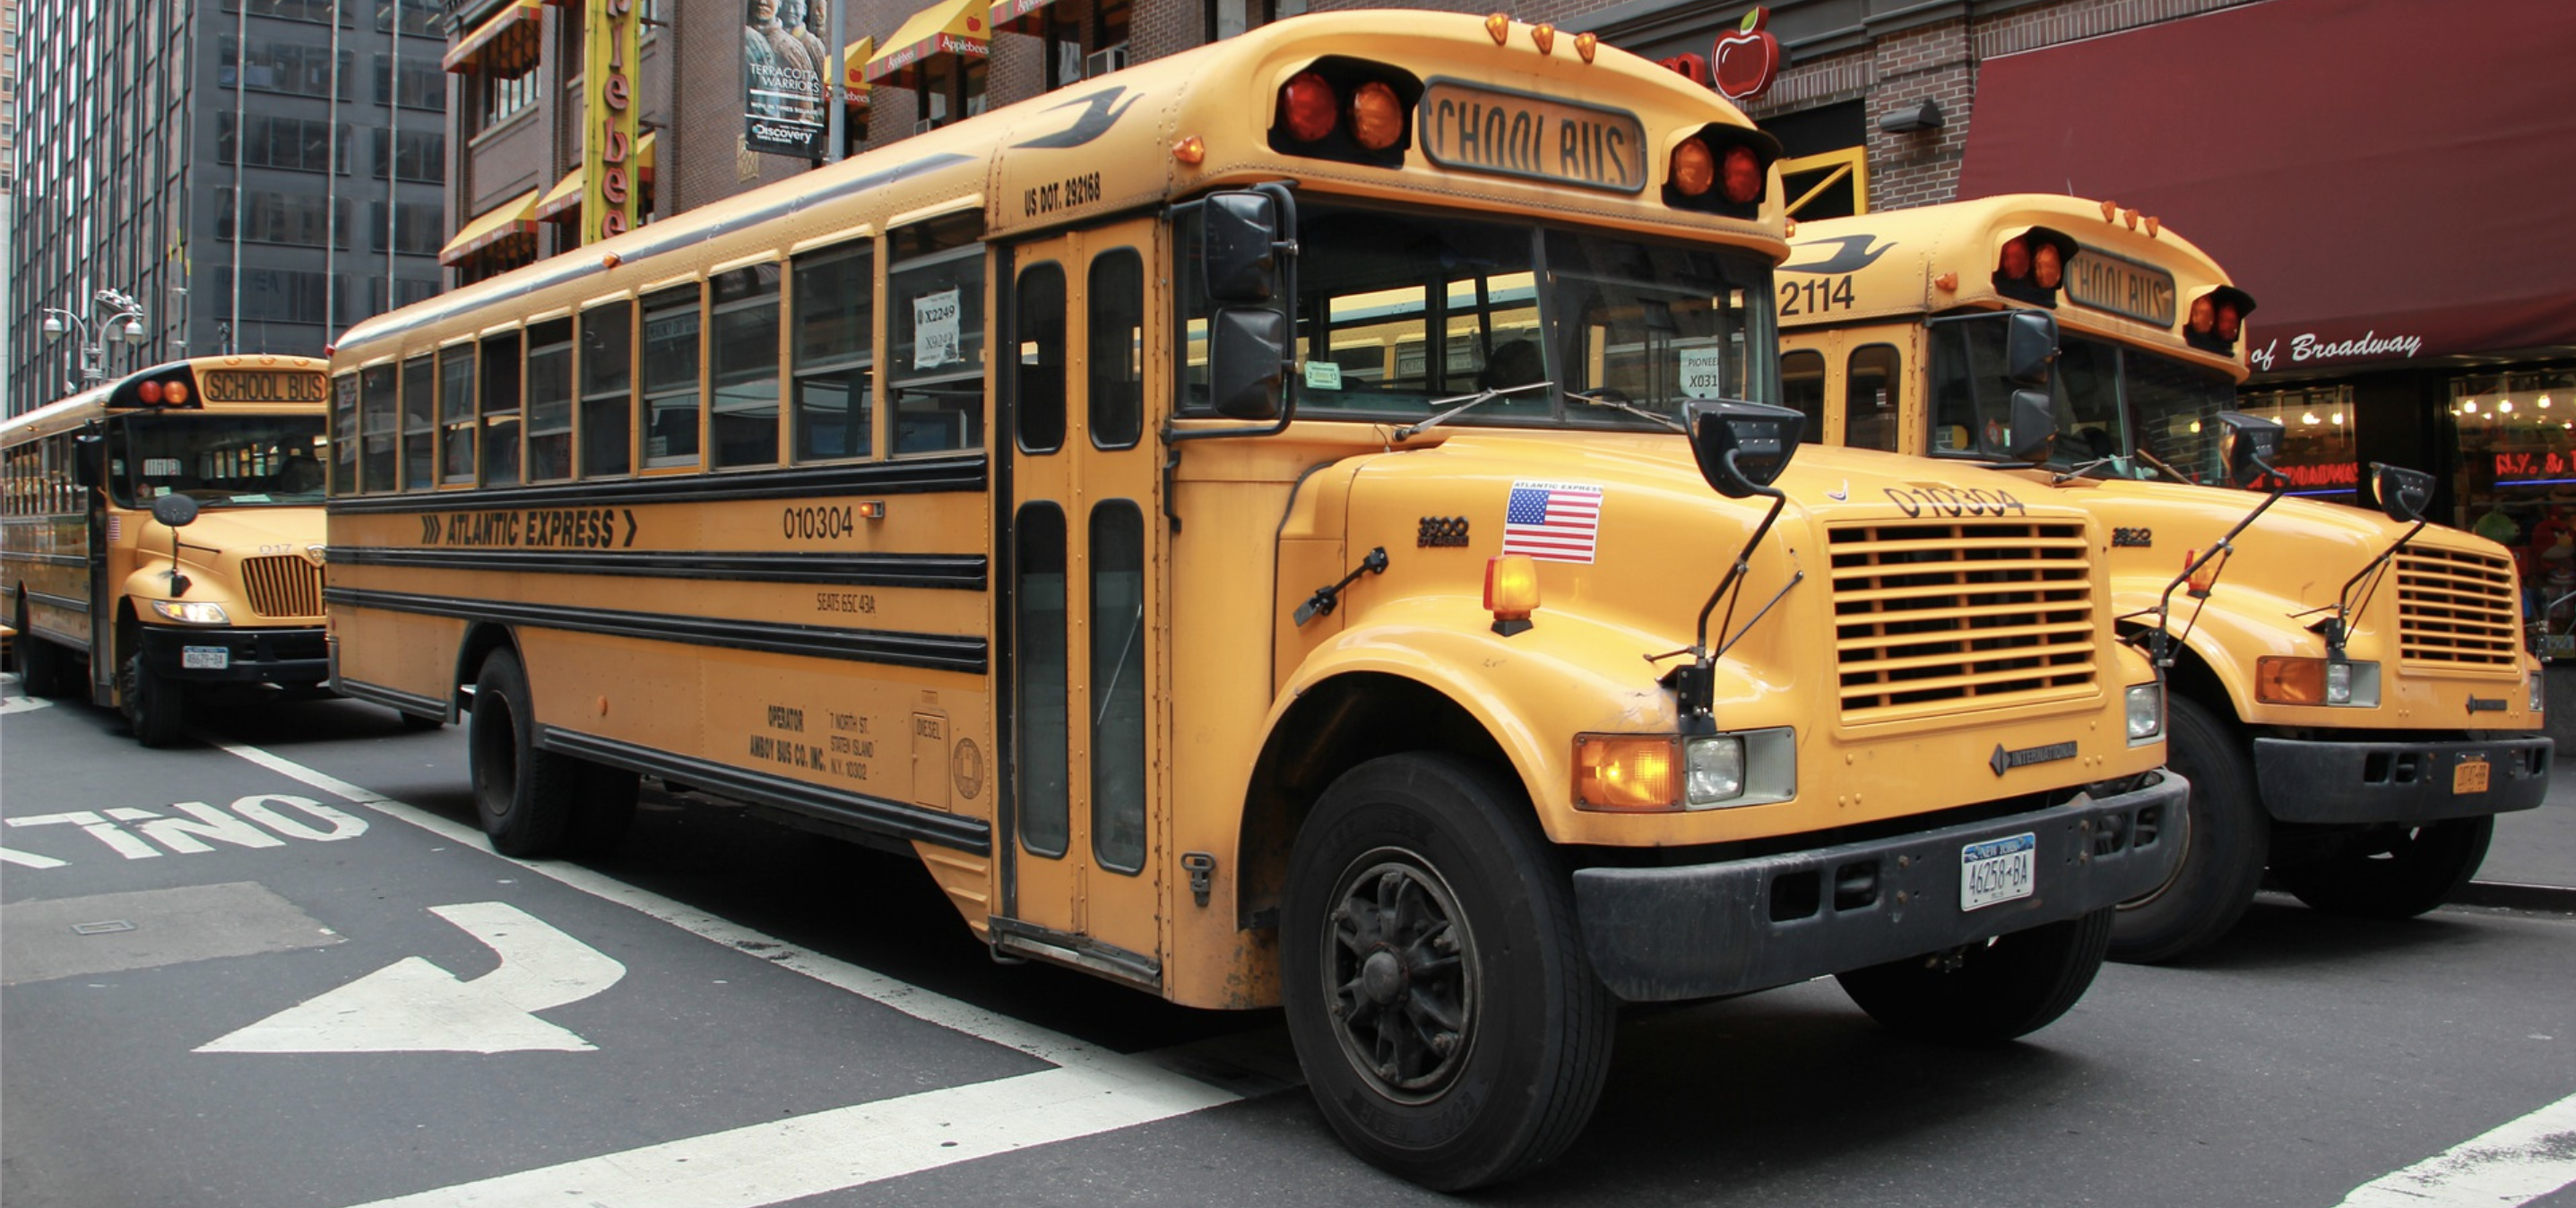 School bus in NYC